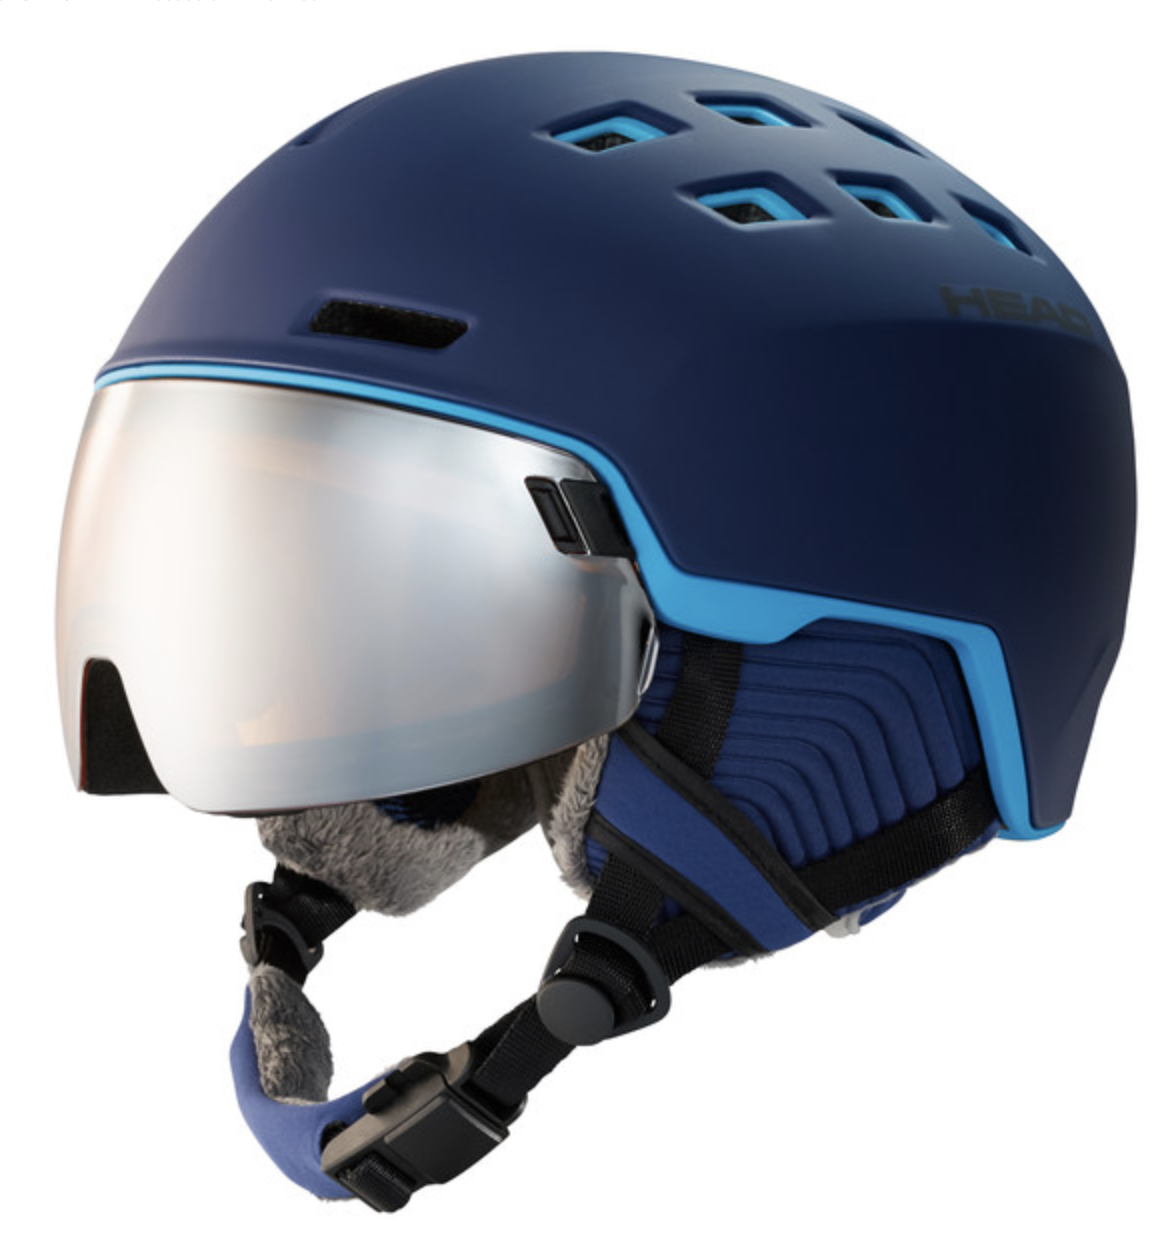 Ski helmet, snowboard helmet, ski helmet with visor